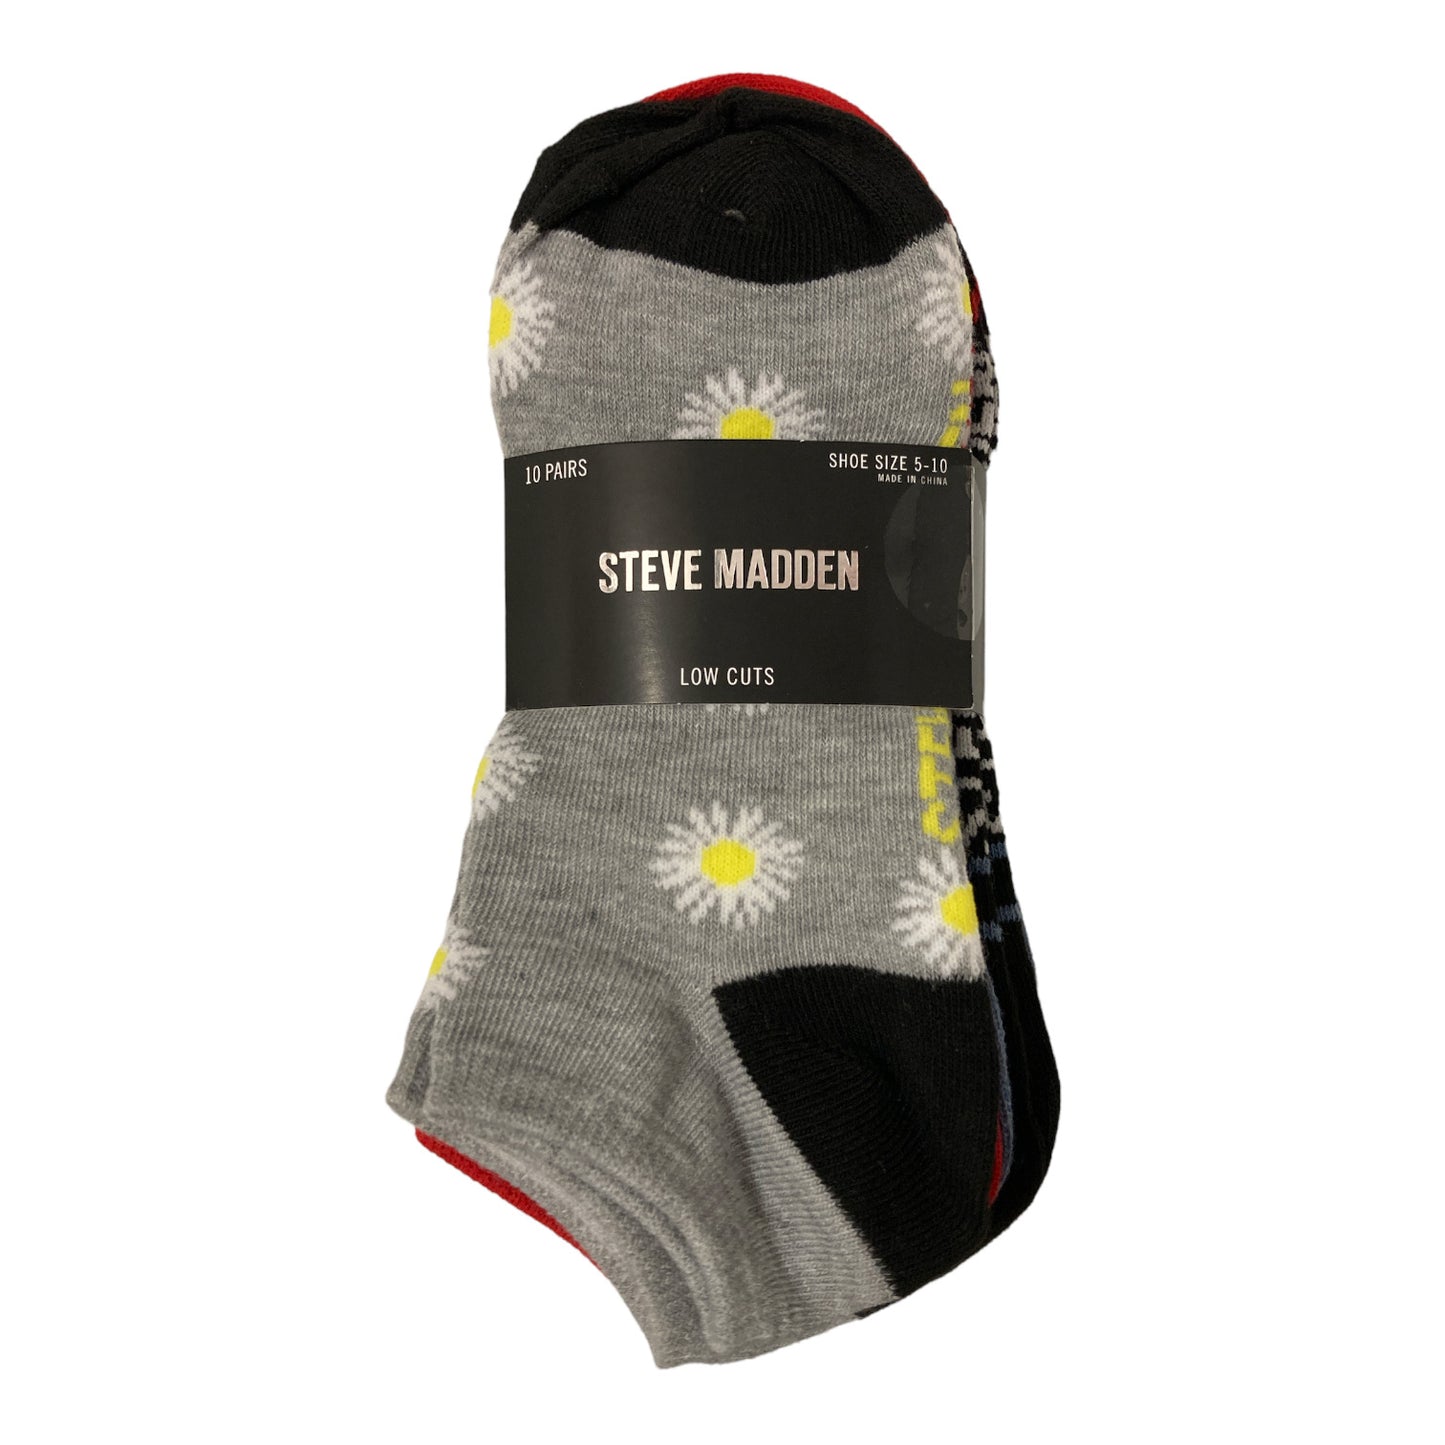 Steve Madden Women's Low Cut Everyday Socks 10 Pairs